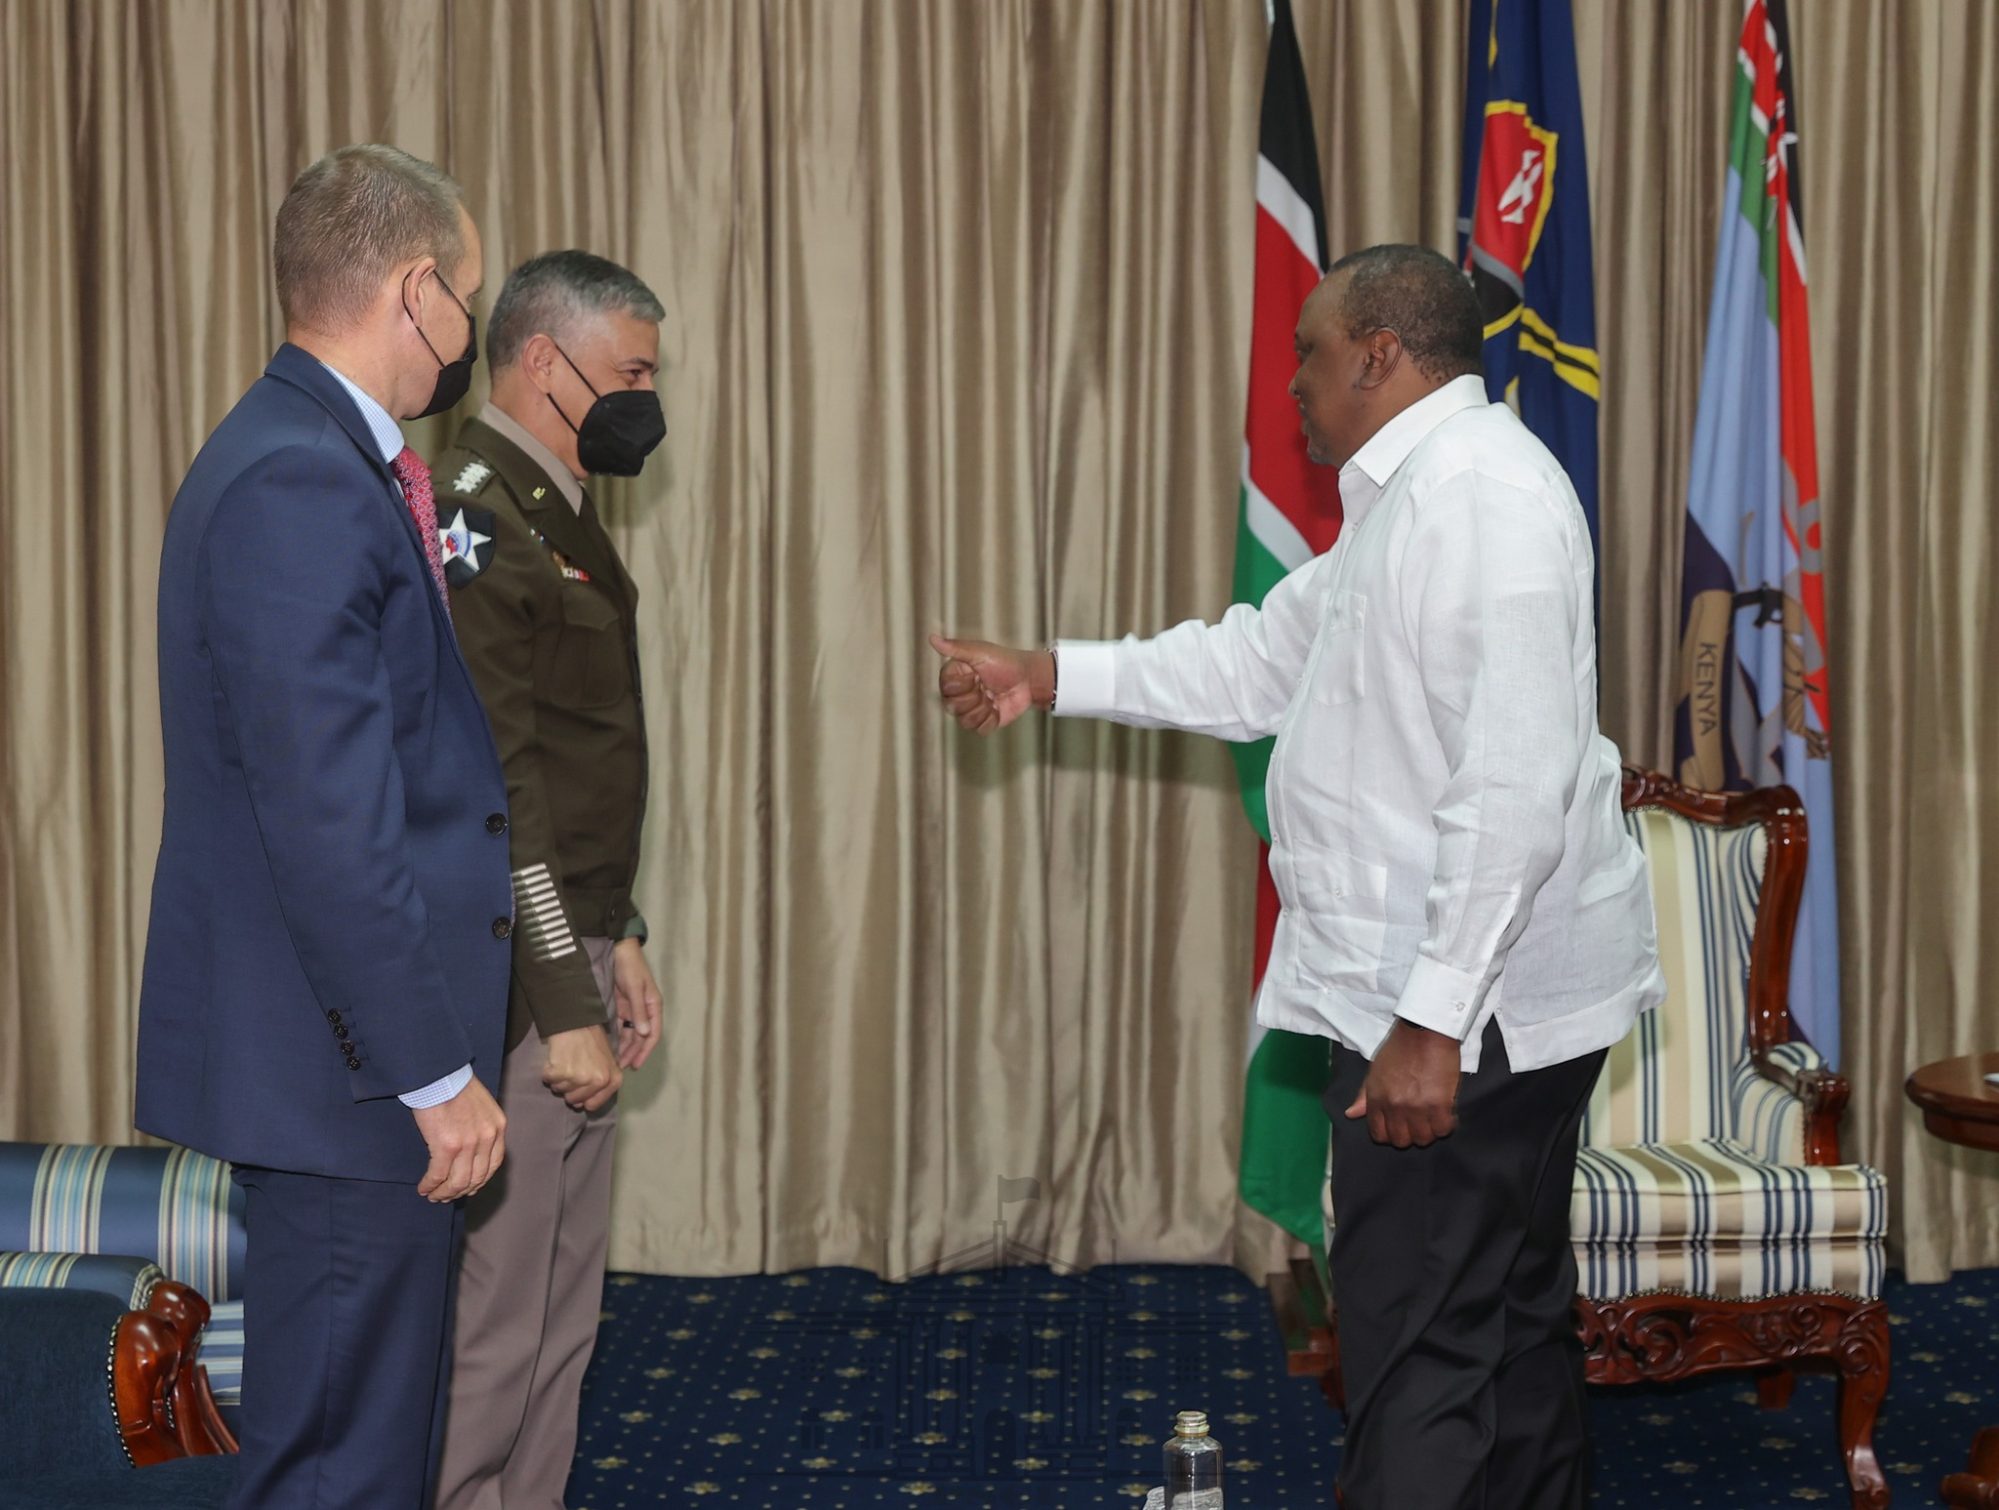 US Army General Stephen J. Townsend meets President Uhuru Kenyatta in Nairobi on Monday. Photo: Handout